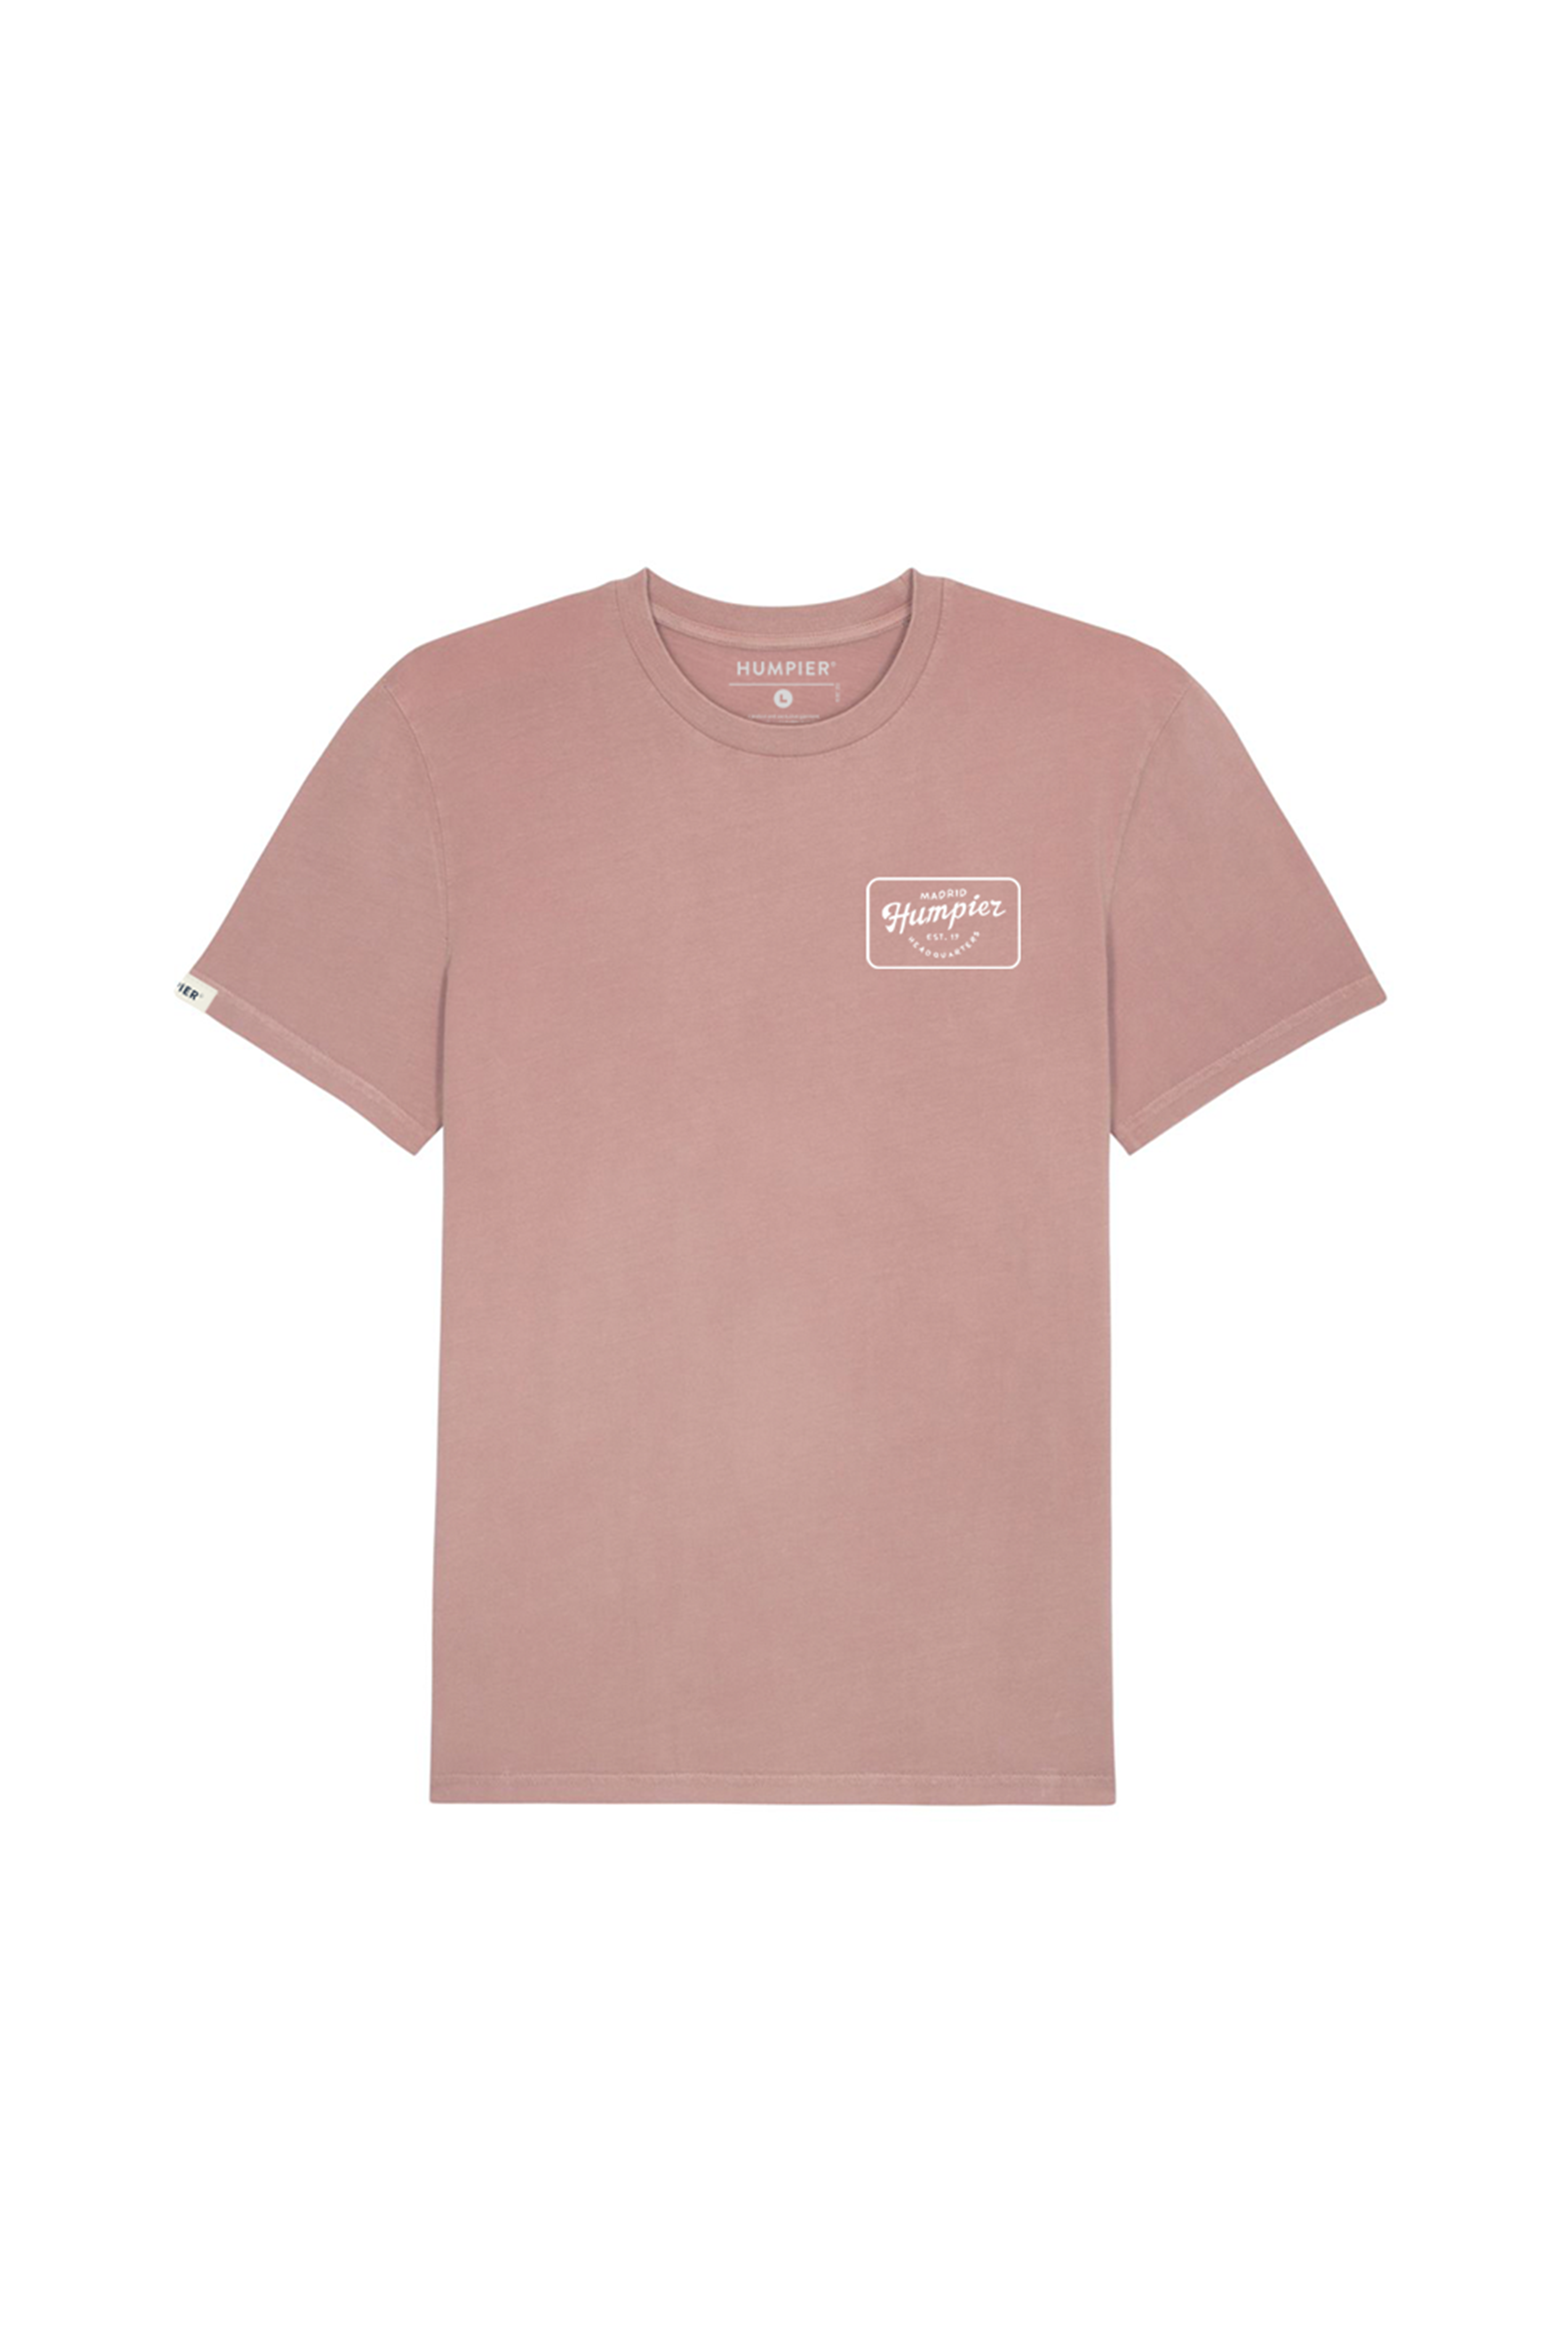 Camiseta manga corta Head & Heart Humpier rosa